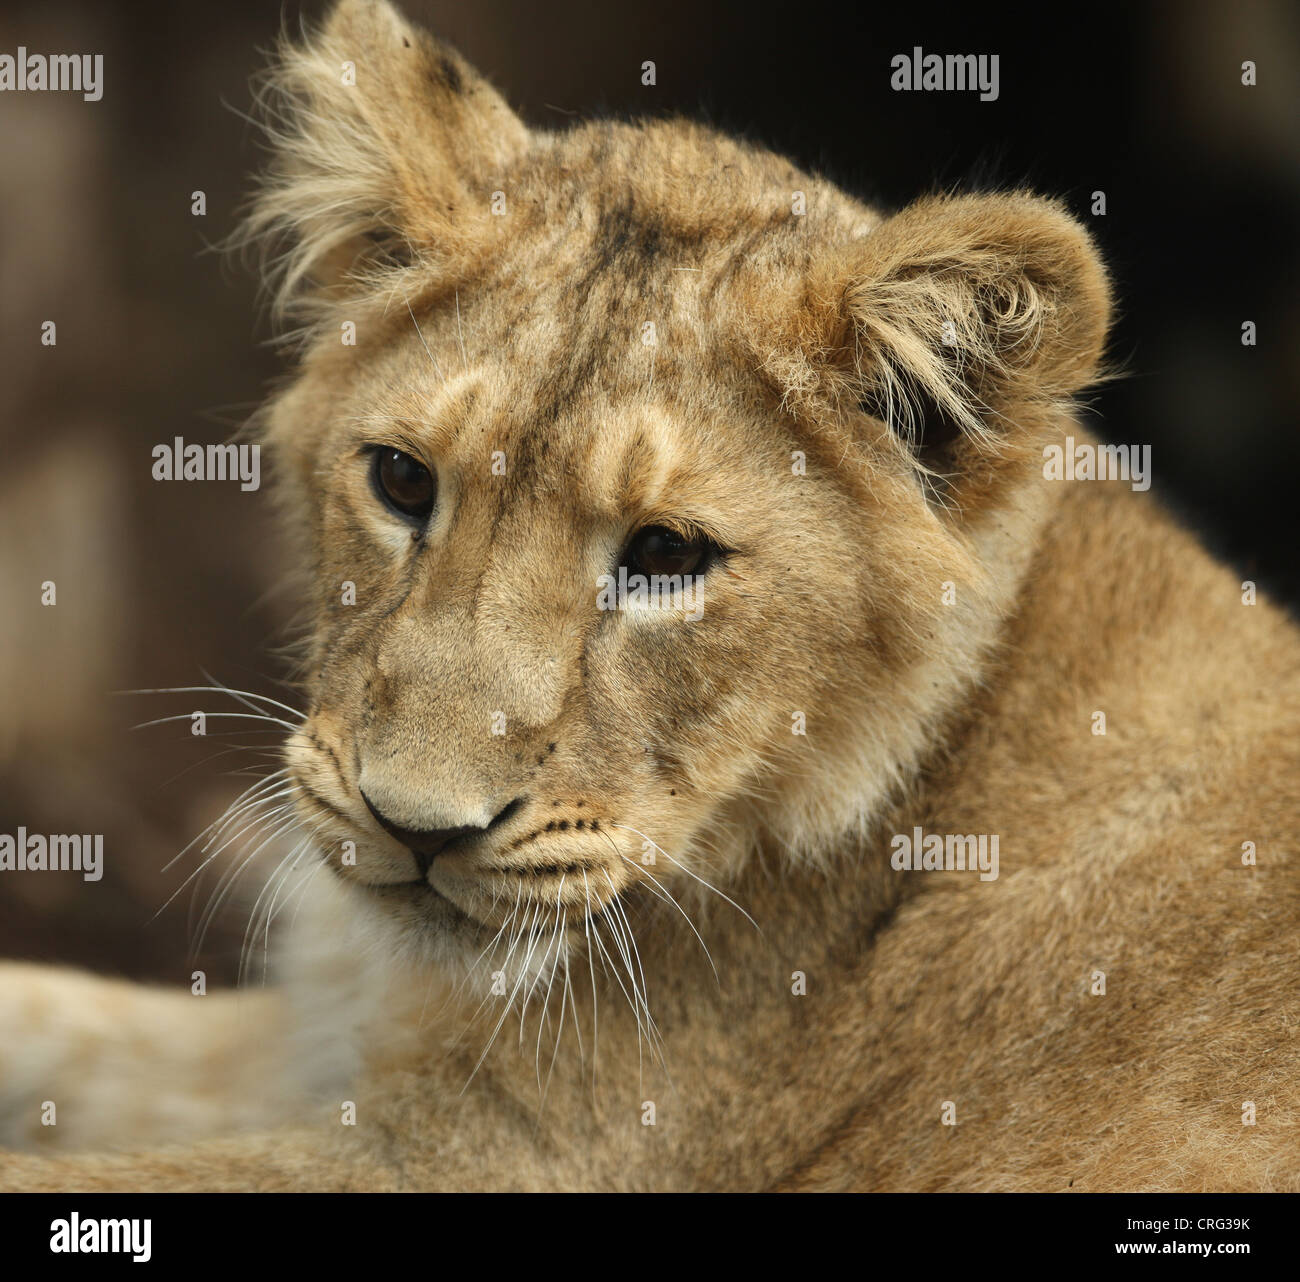 Retrato de un cachorro de león asiático Foto de stock